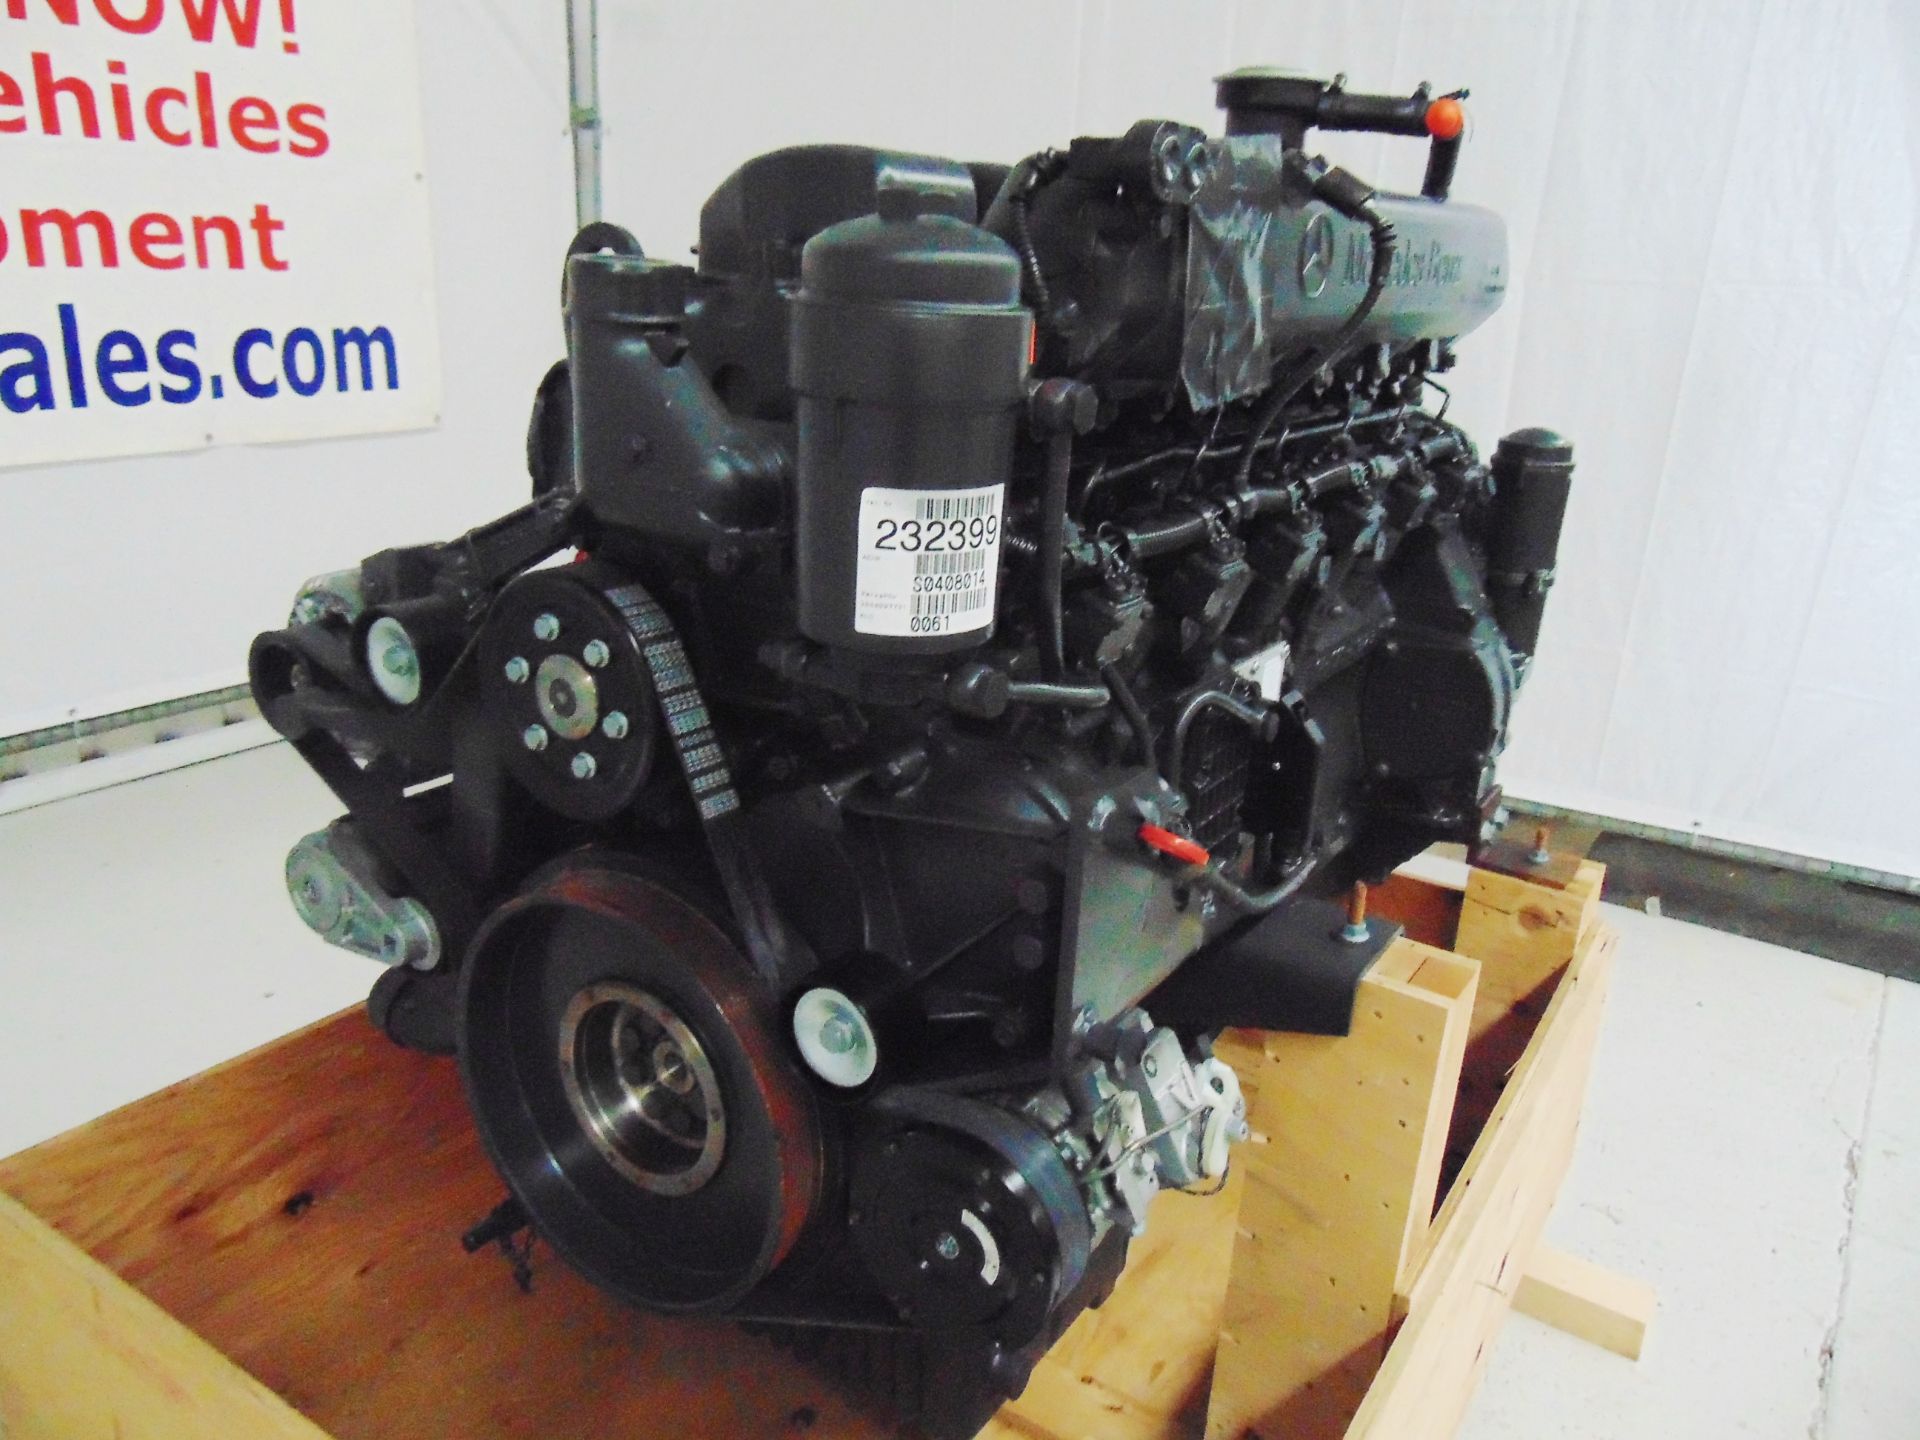 Brand New & Unused Mercedes-Benz OM457LA Turbo Diesel Engine - Image 18 of 19